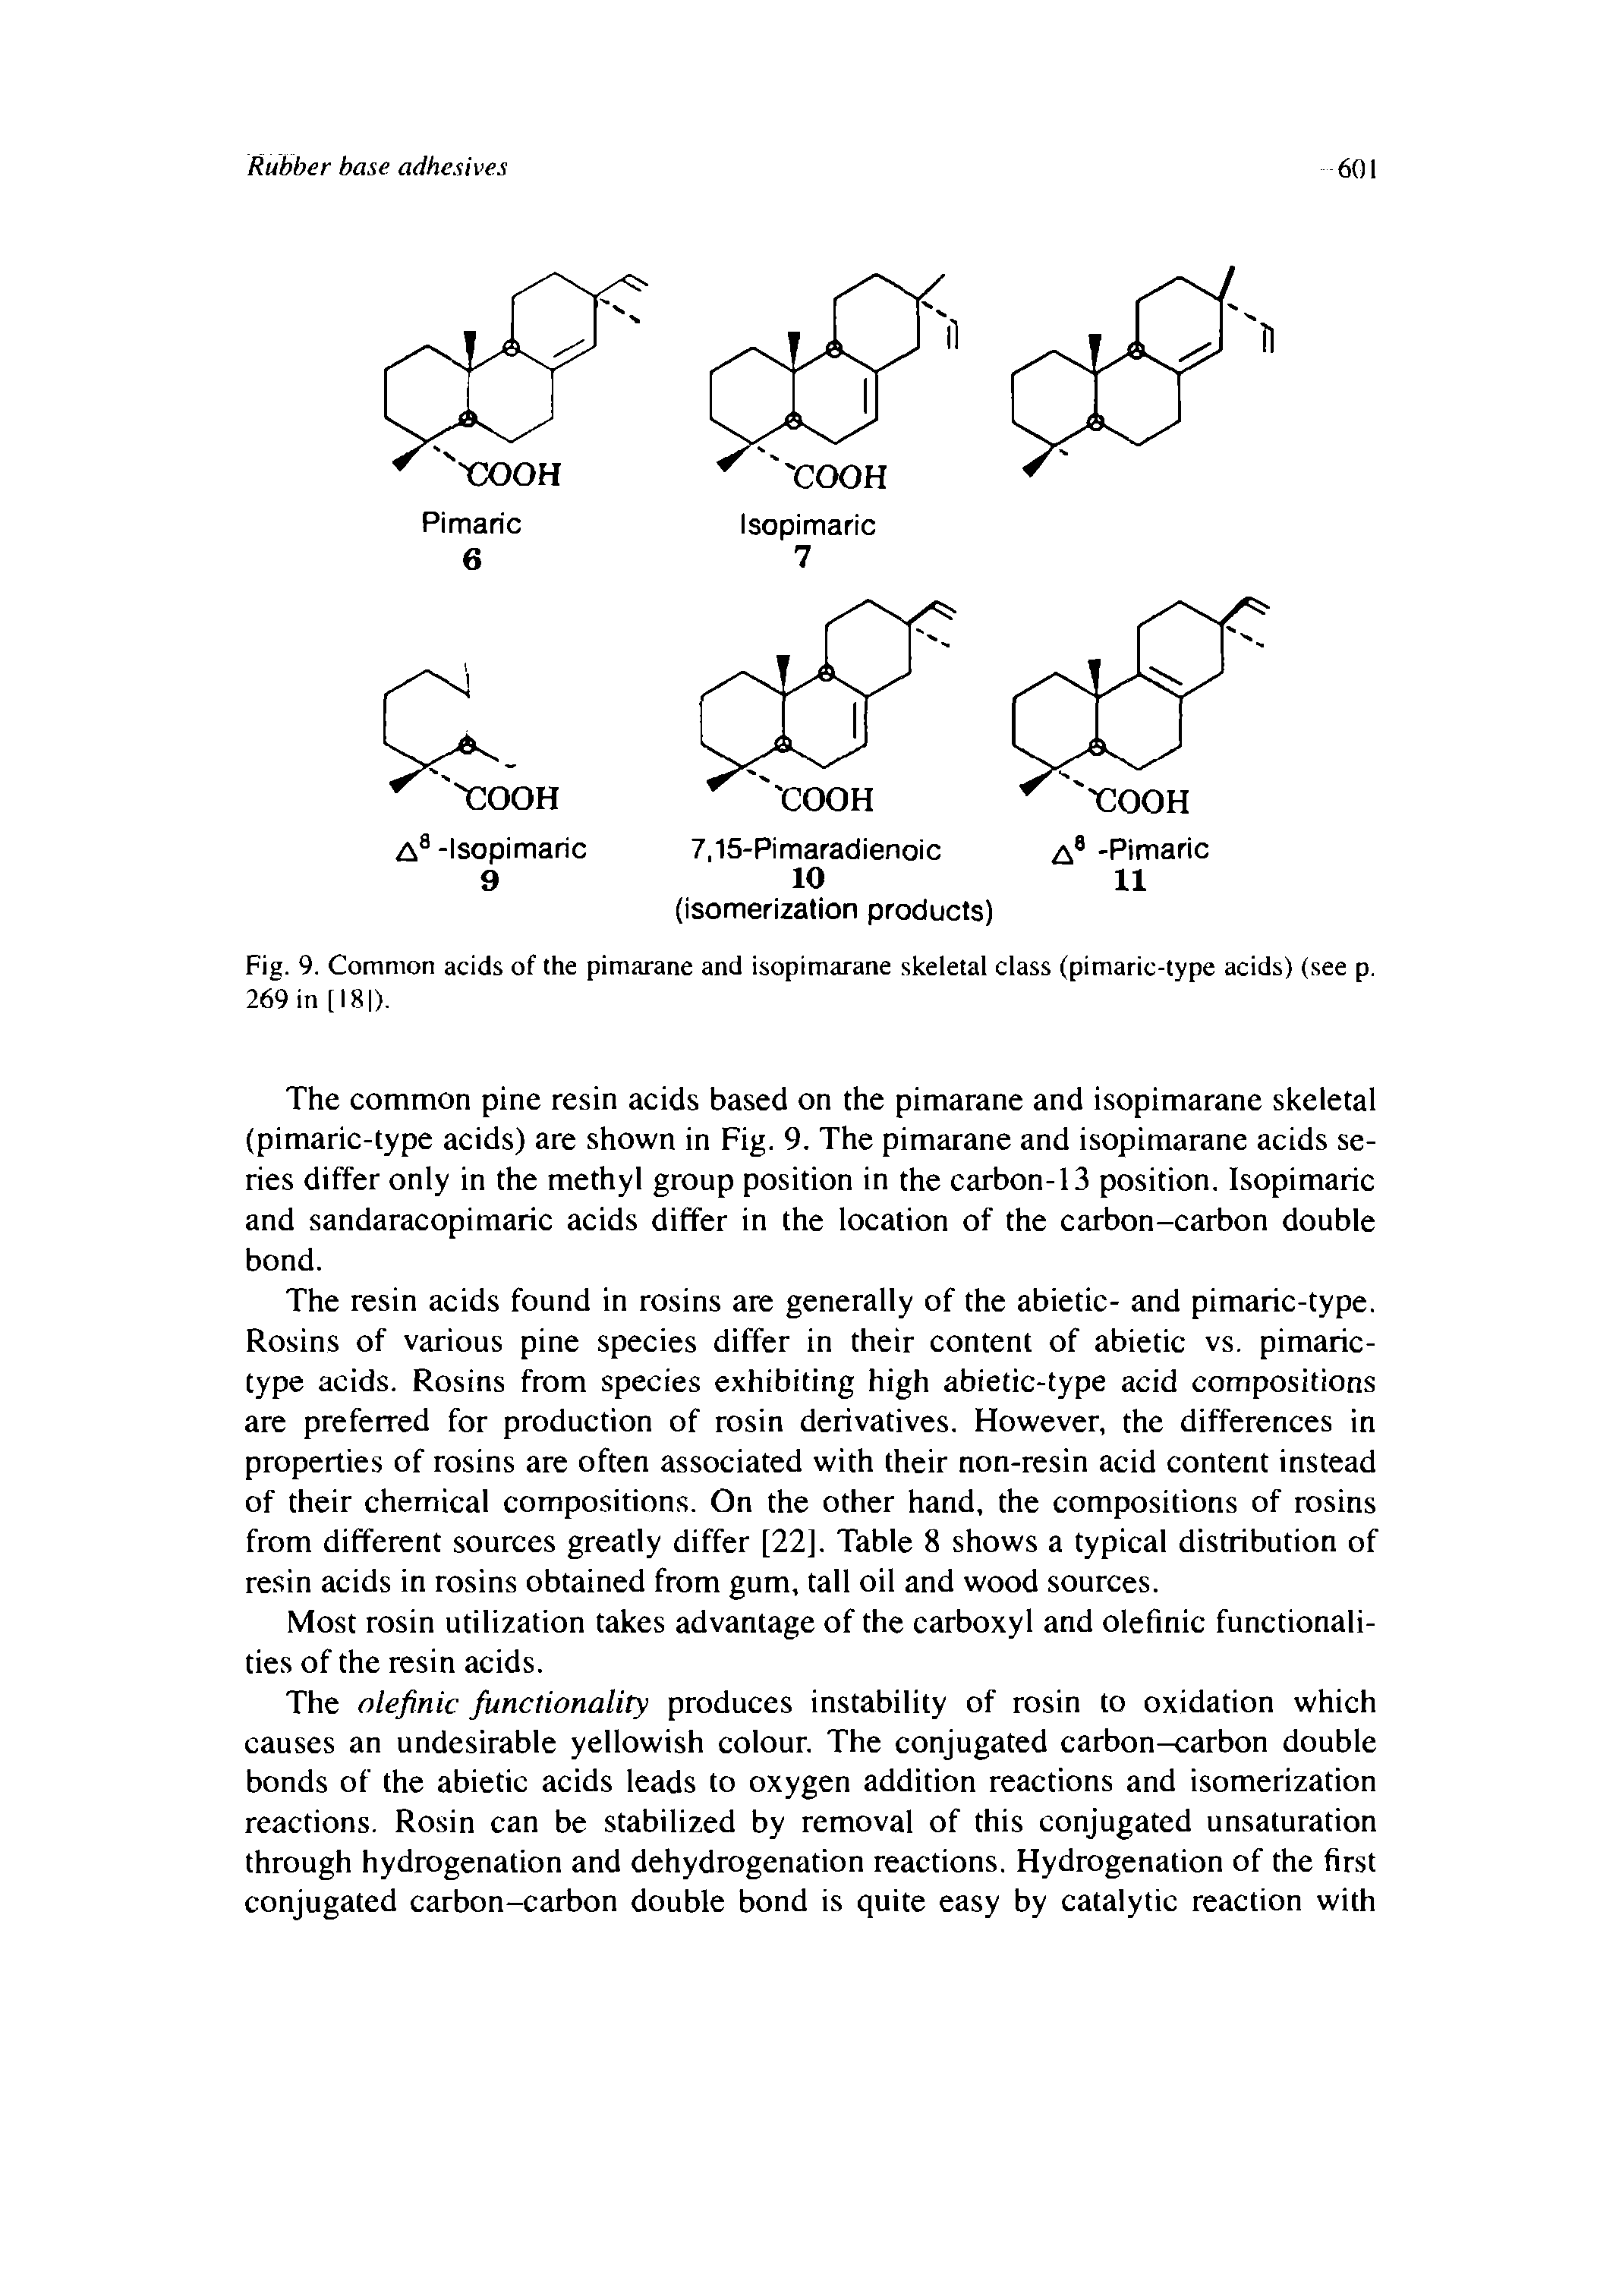 Fig. 9. Common acids of the pimarane and isopimarane skeletal class (pimaric-type acids) (see p. 269 in [18 ).